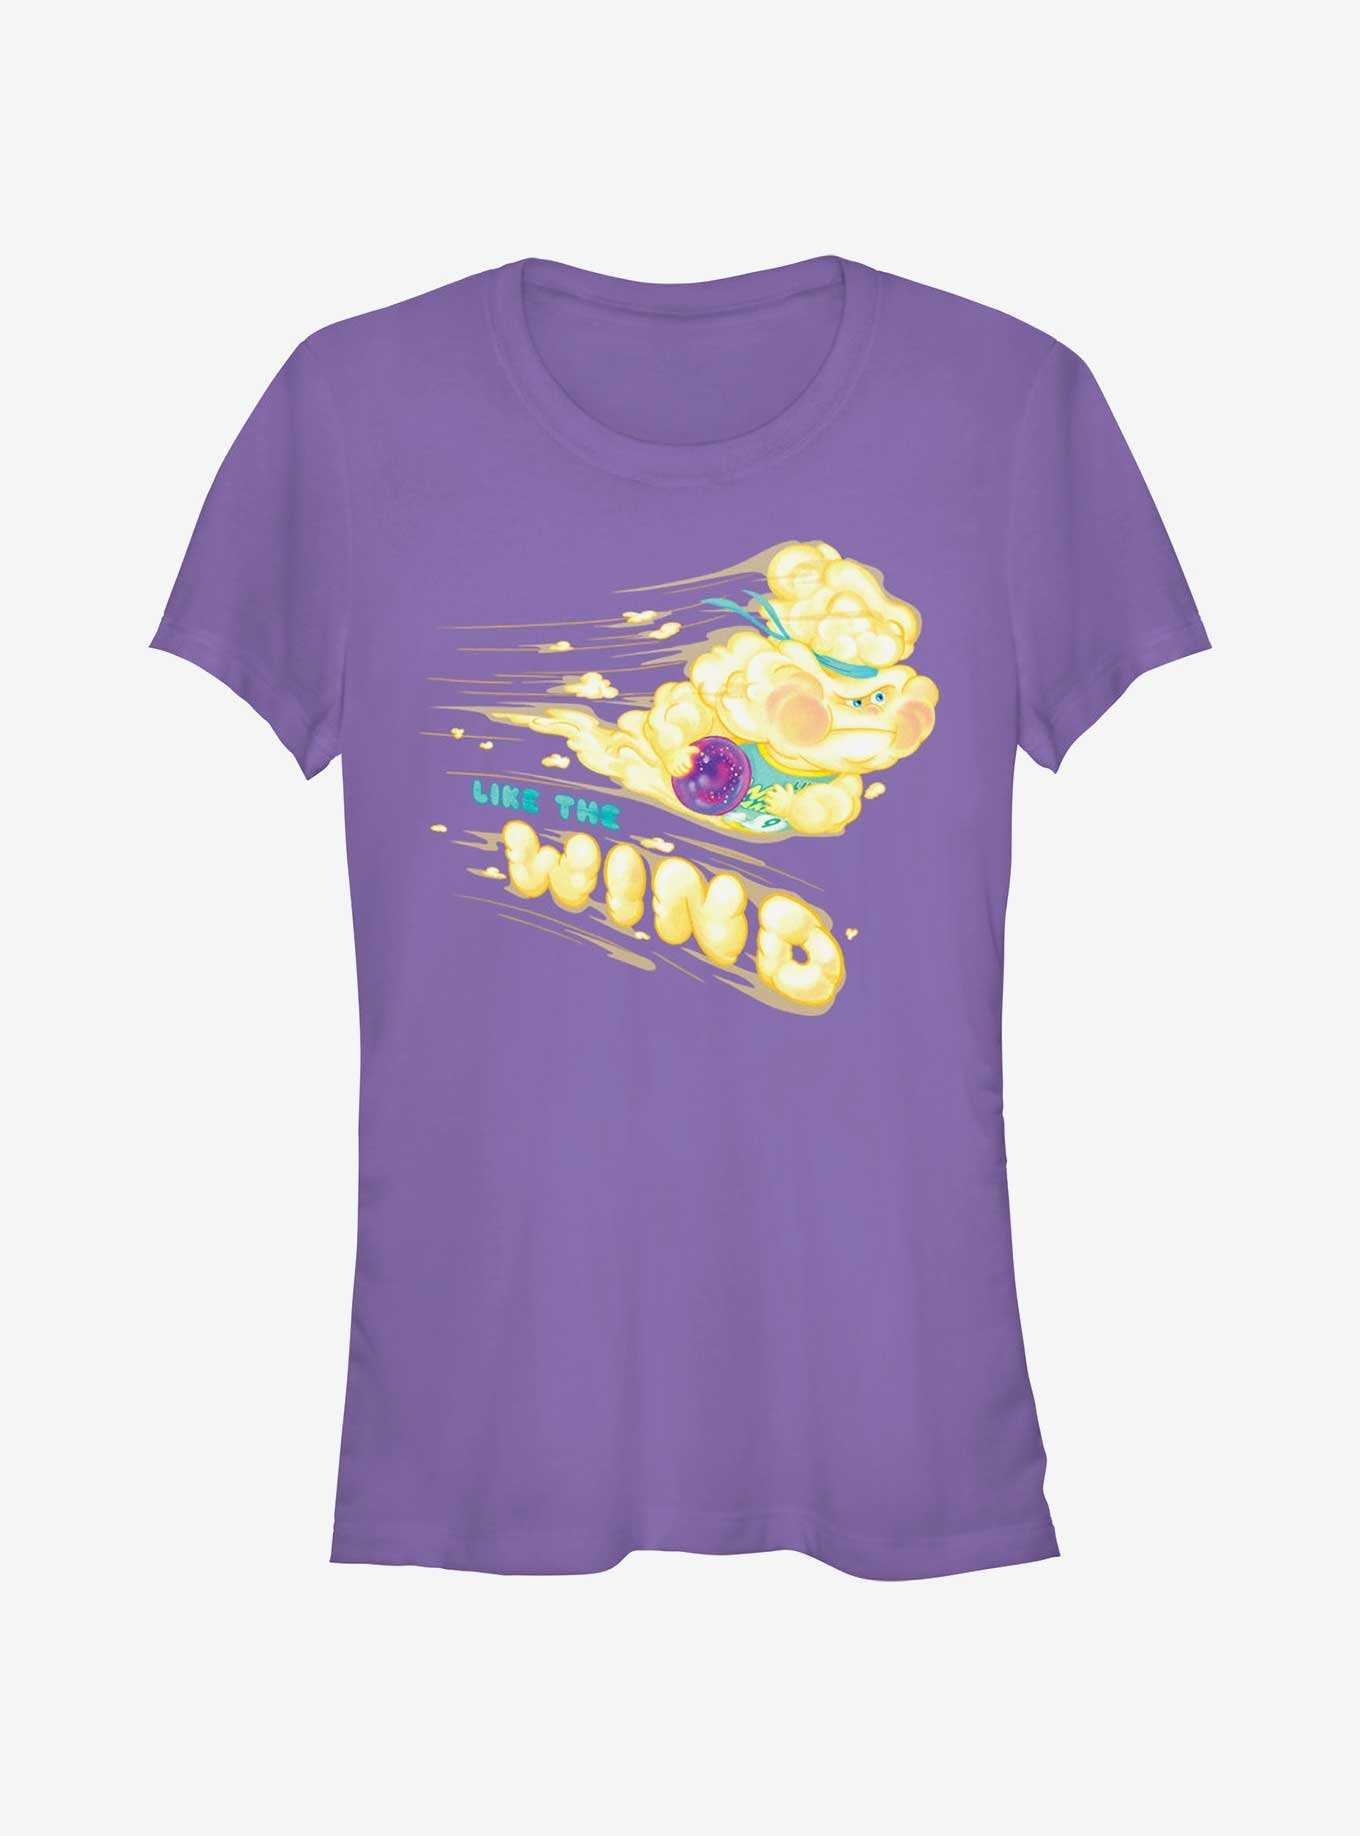 Disney Pixar Elemental Like The Wind Girls T-Shirt, , hi-res